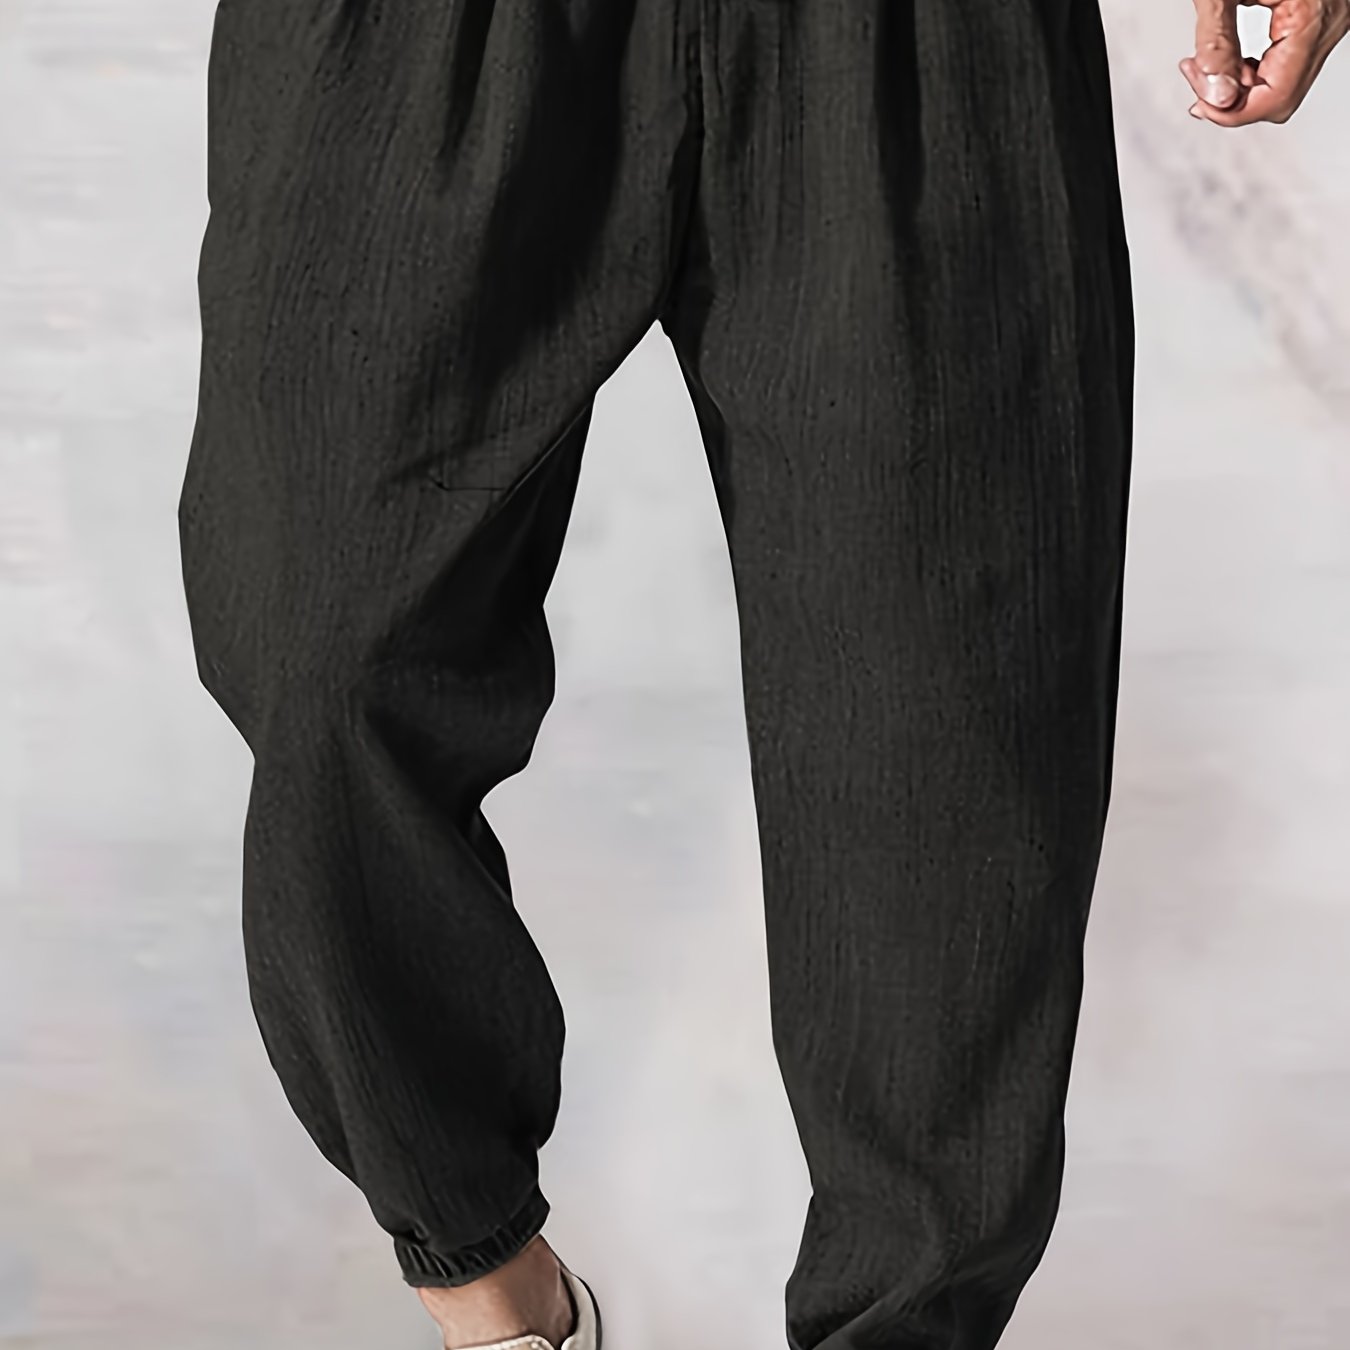 Selected Homme loose fit workwear pants in black | ASOS